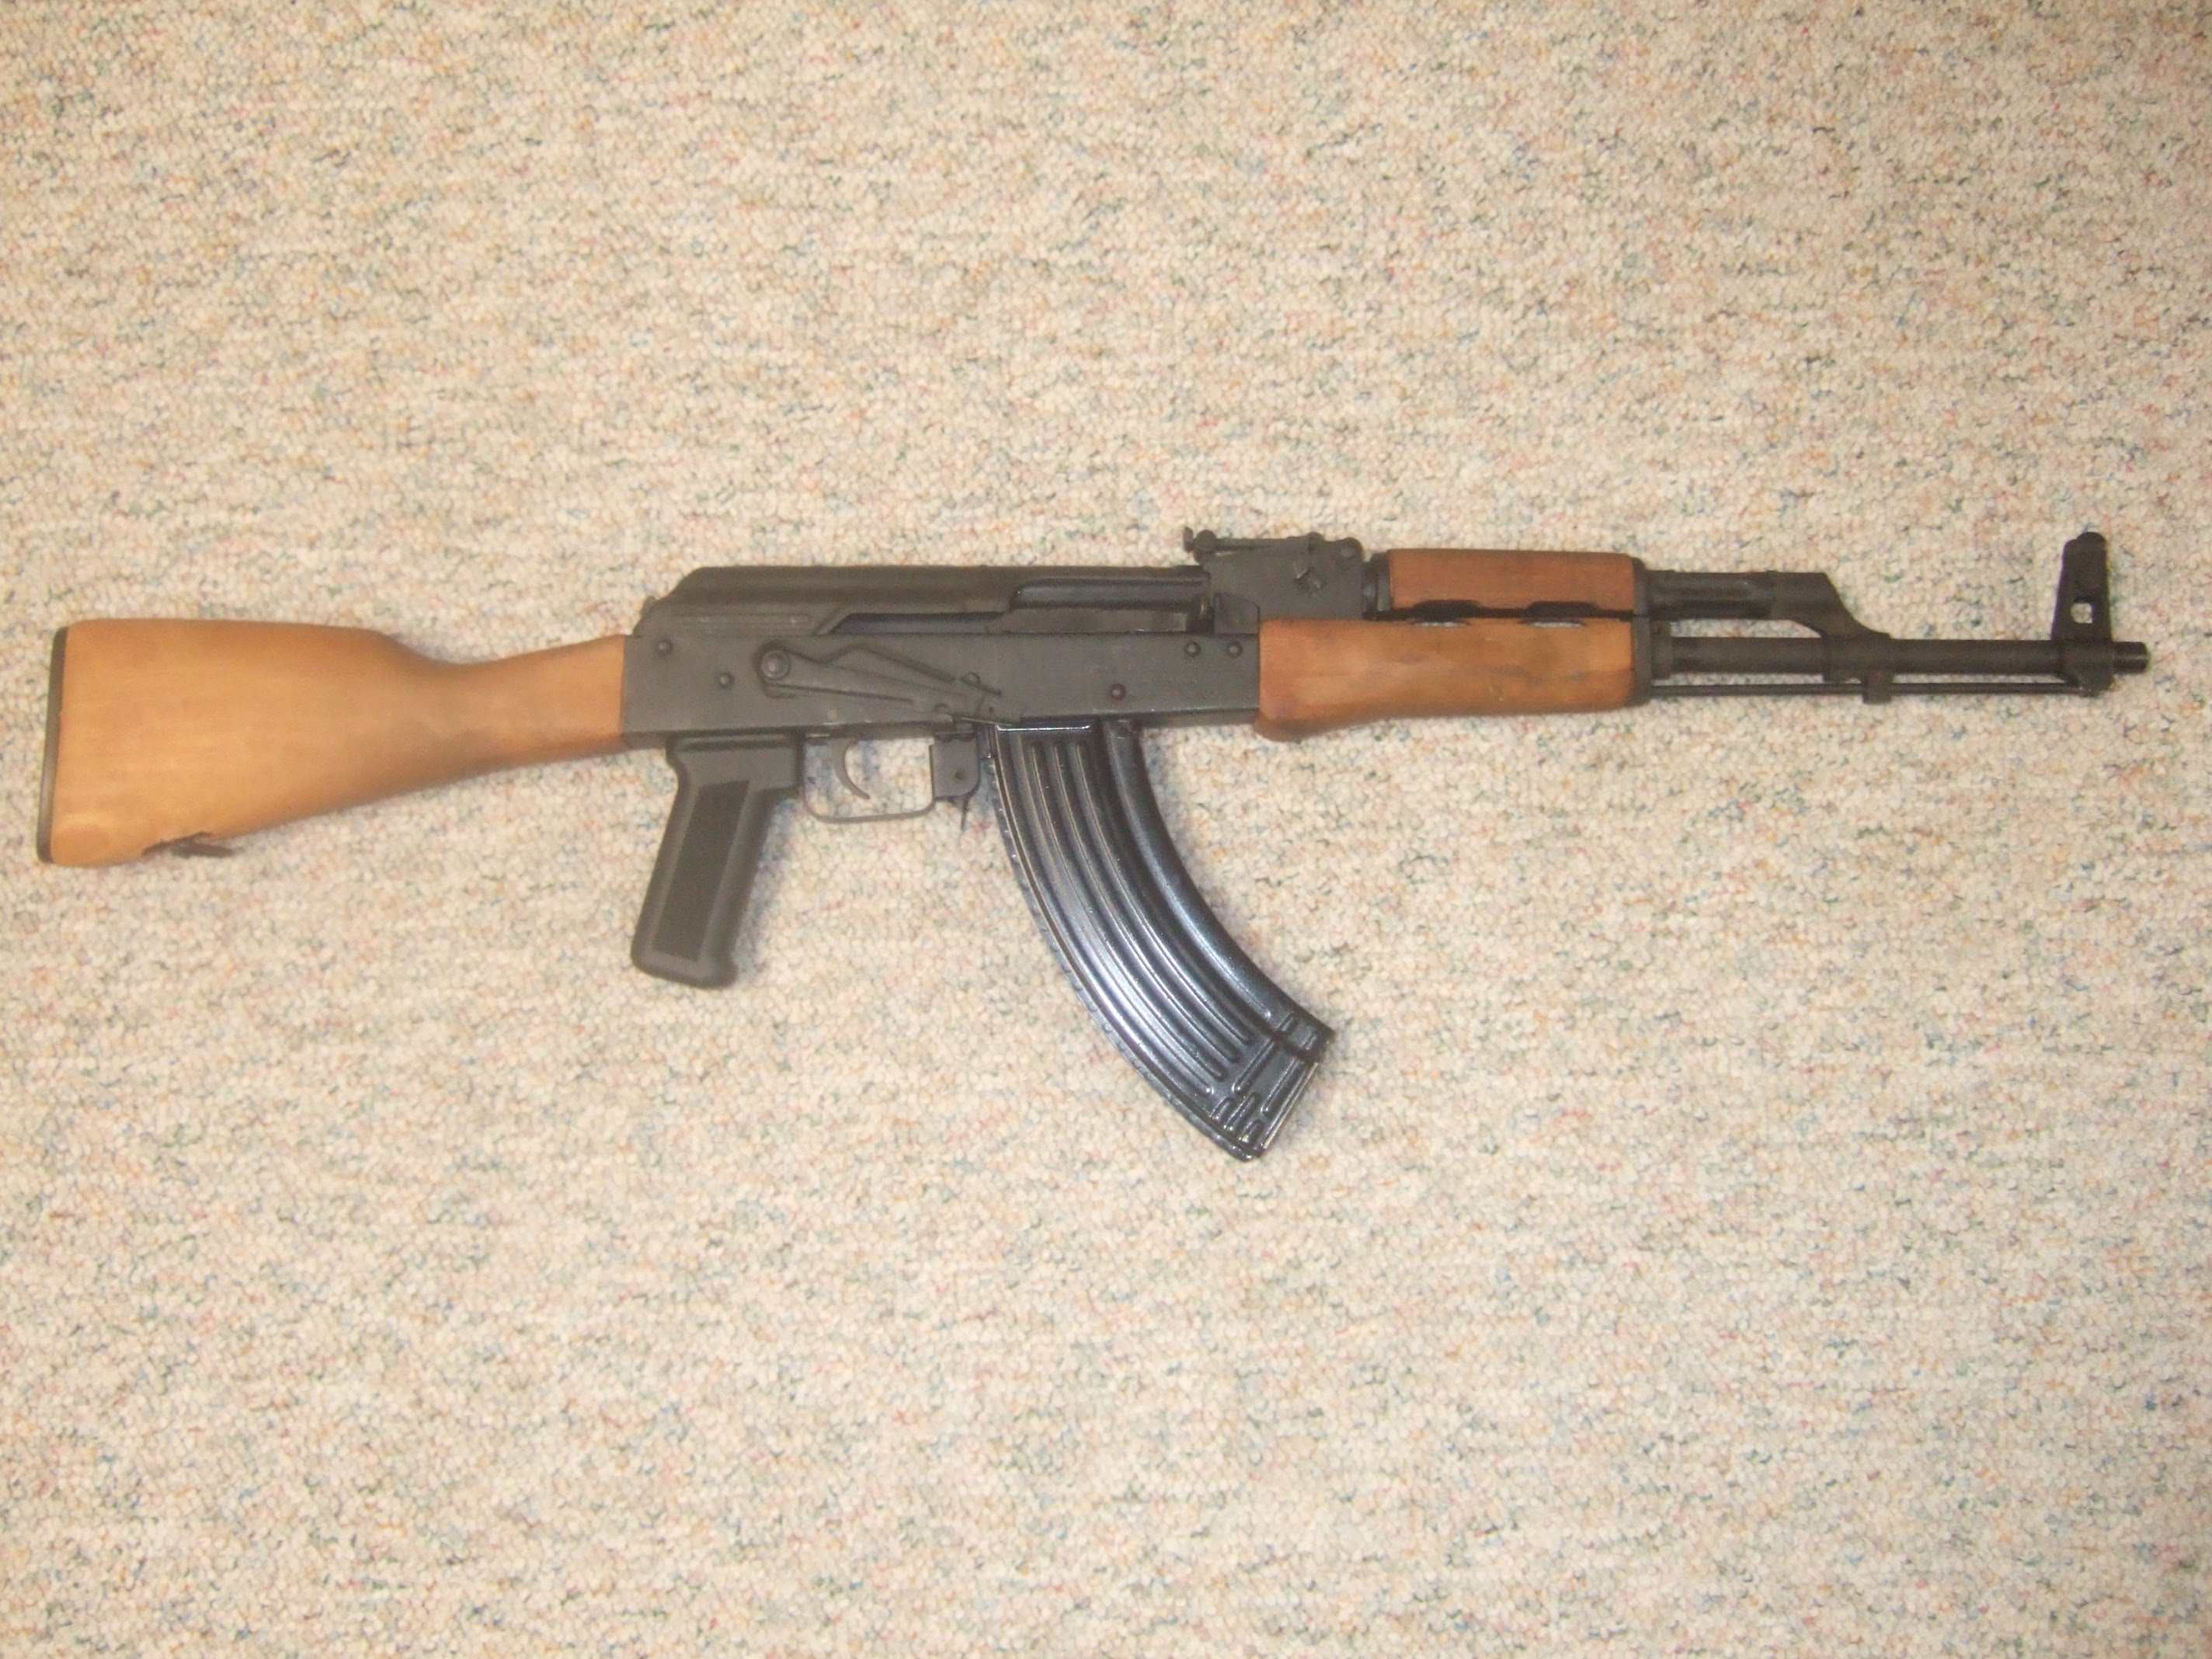 WASR 10 AK-47